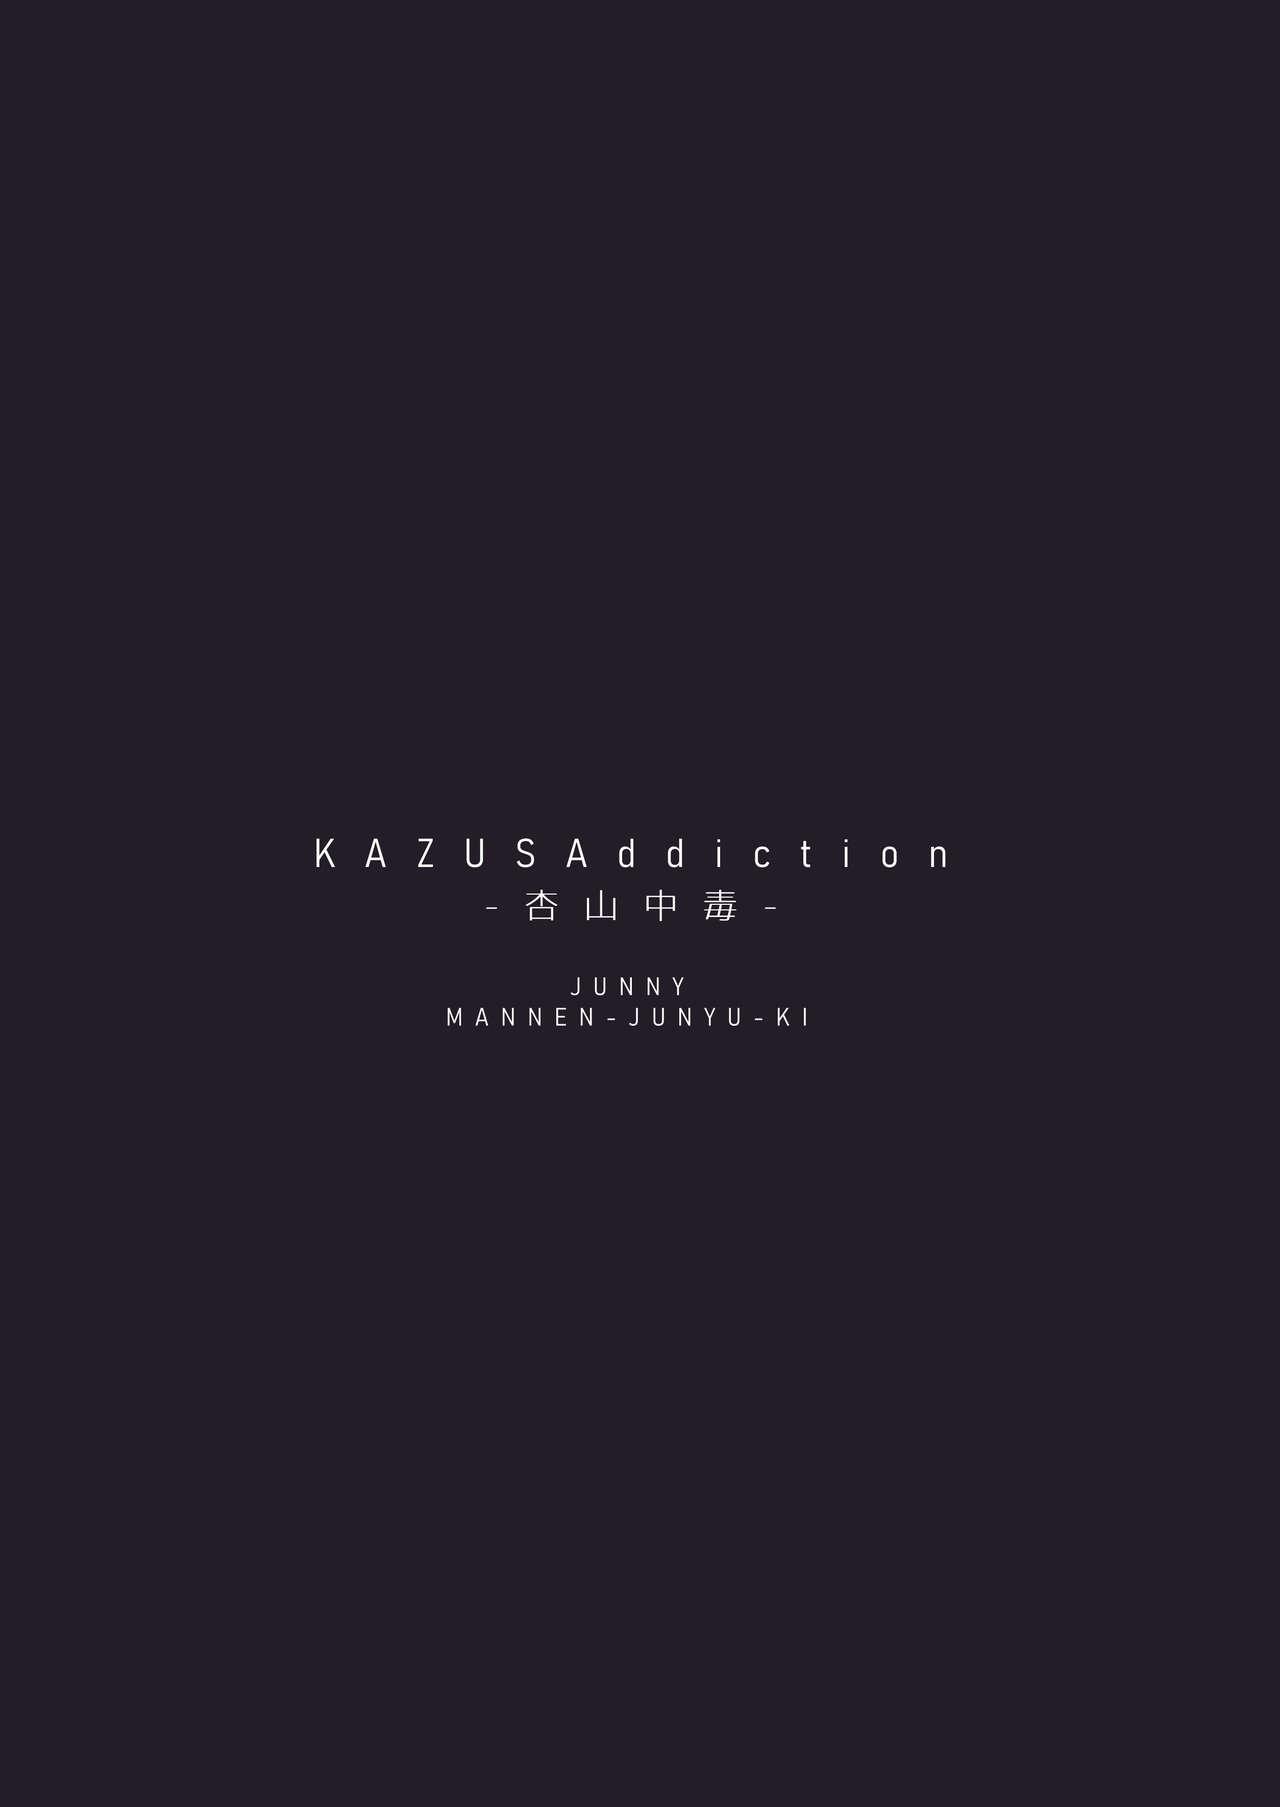 KAZUSAddiction 31